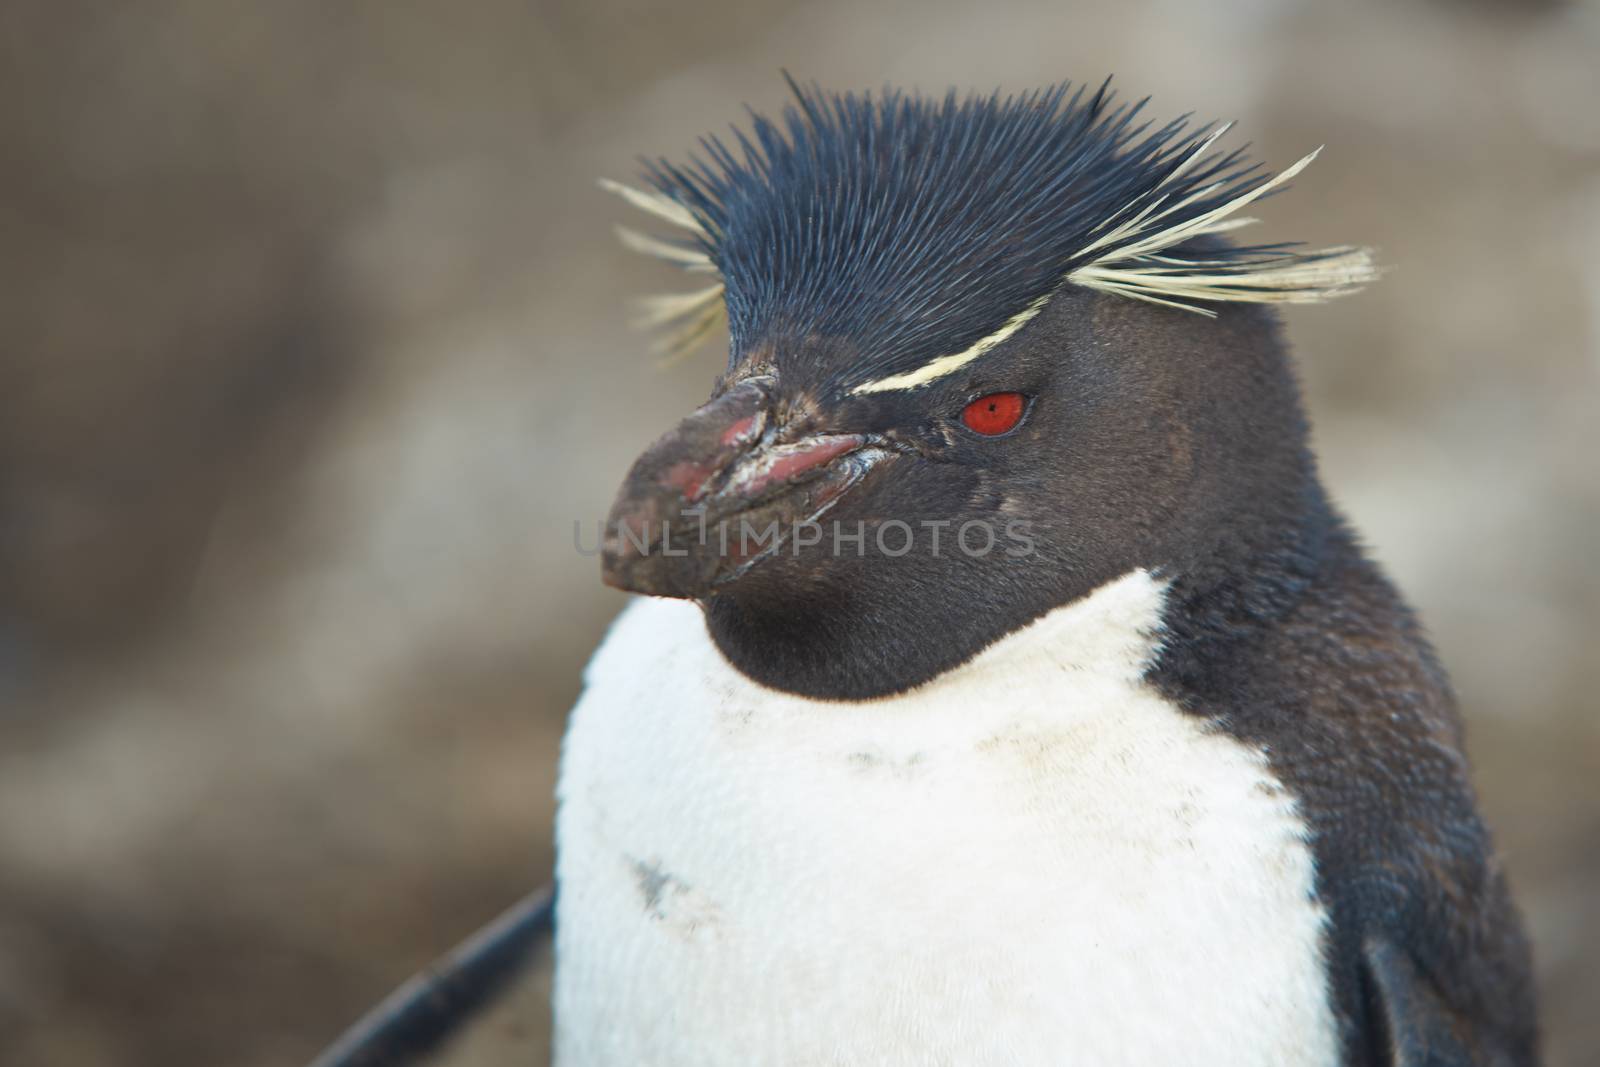 Rockhopper Penguin (Eudyptes chrysocome) on the cliffs of Bleaker Island in the Falkland Islands.